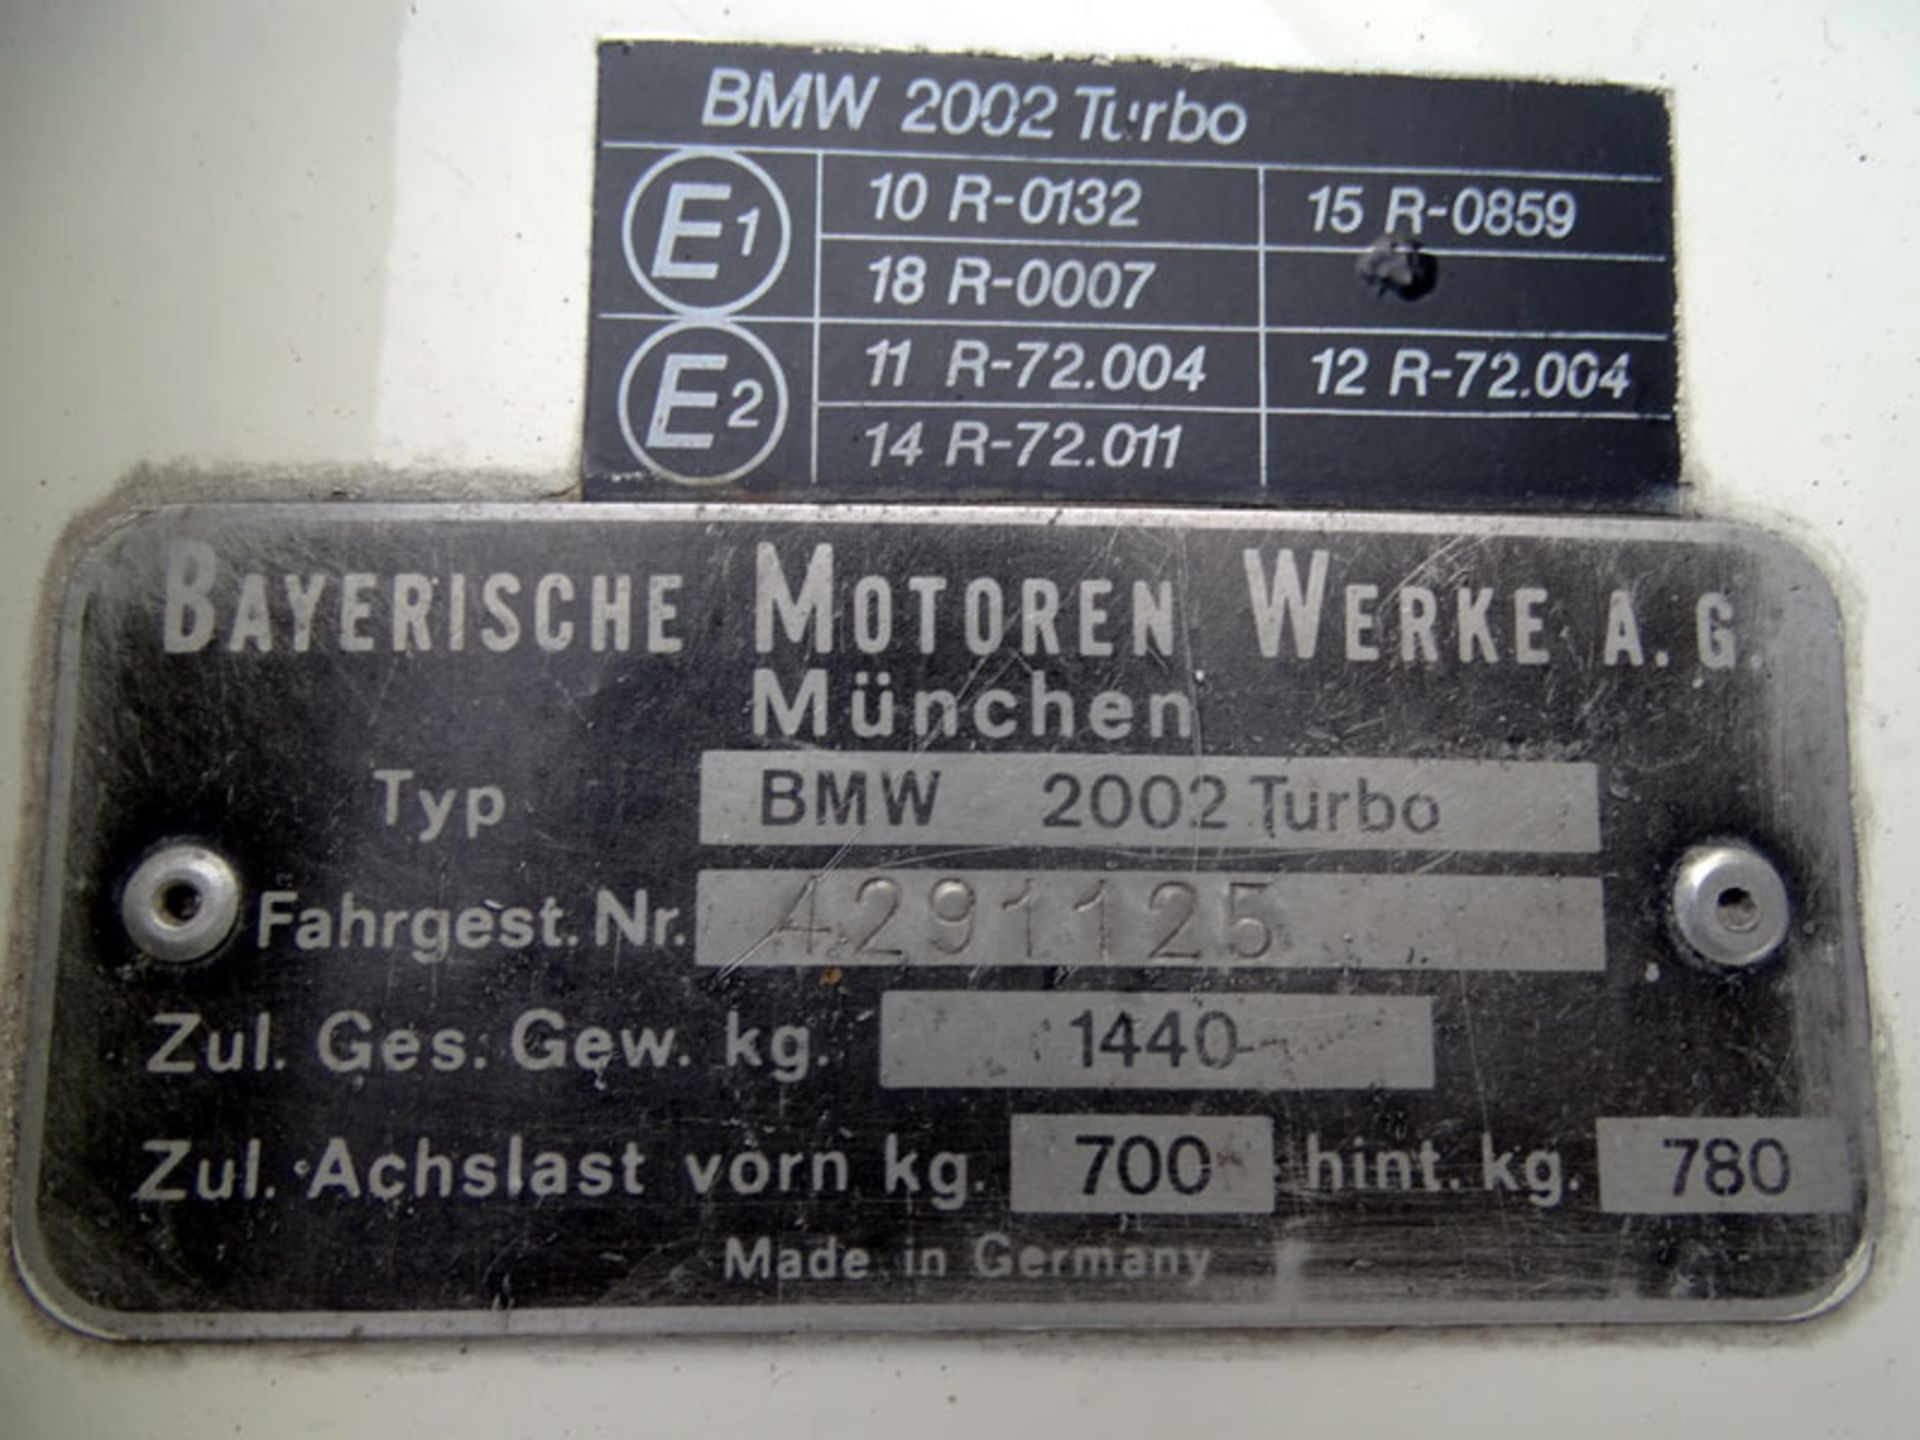 1975 BMW 2002 Turbo - Image 9 of 11